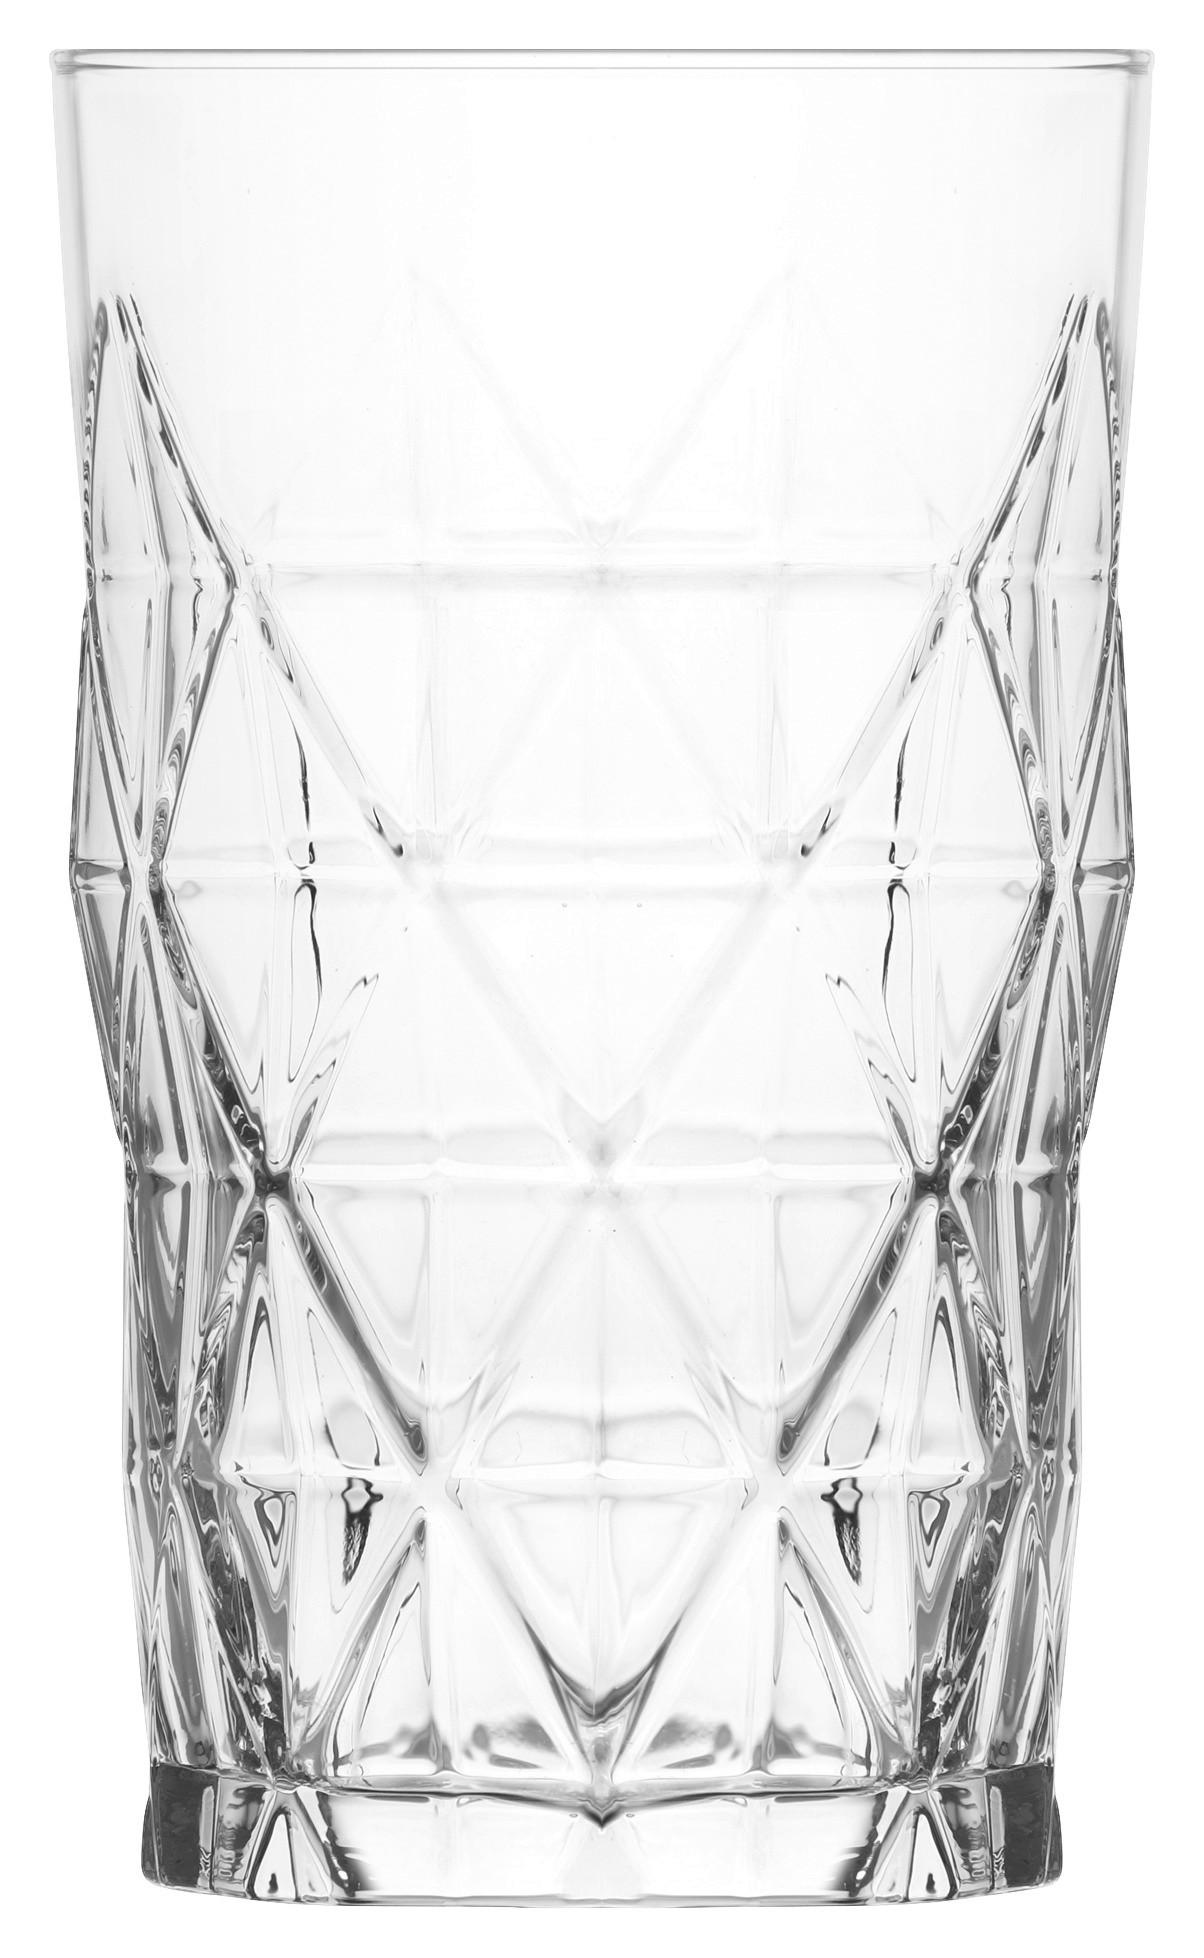 Sklenička Na Longdrink Skye - čiré, Konvenční, sklo (8,1/13,5cm) - Modern Living